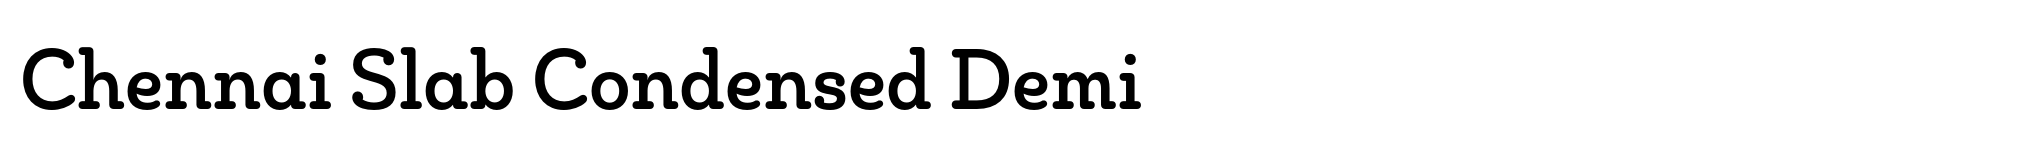 Chennai Slab Condensed Demi image